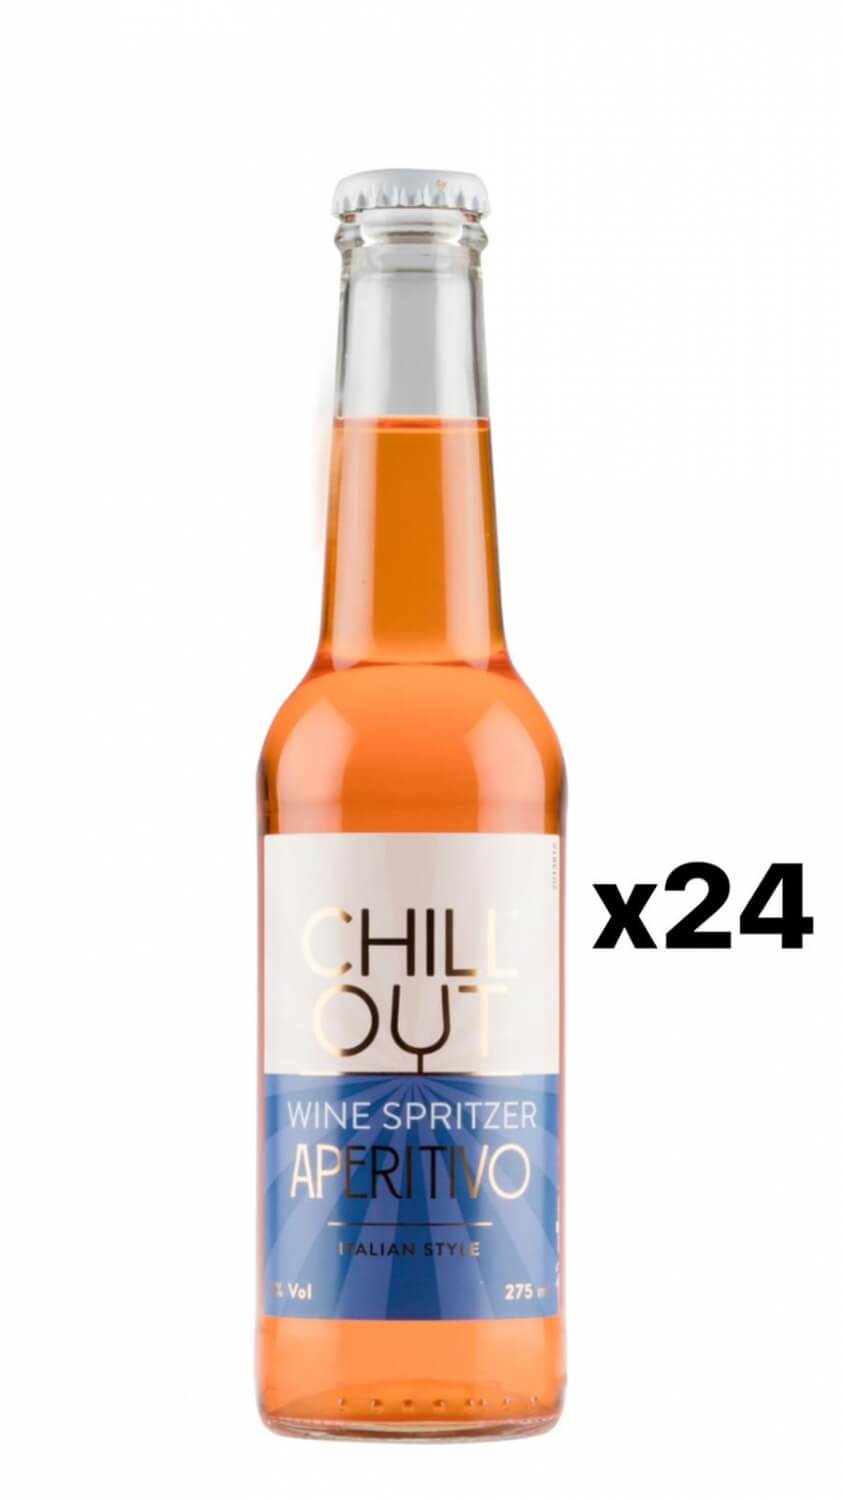 Chill Out Spritzer Aperitivo 5% 24x27,5cl